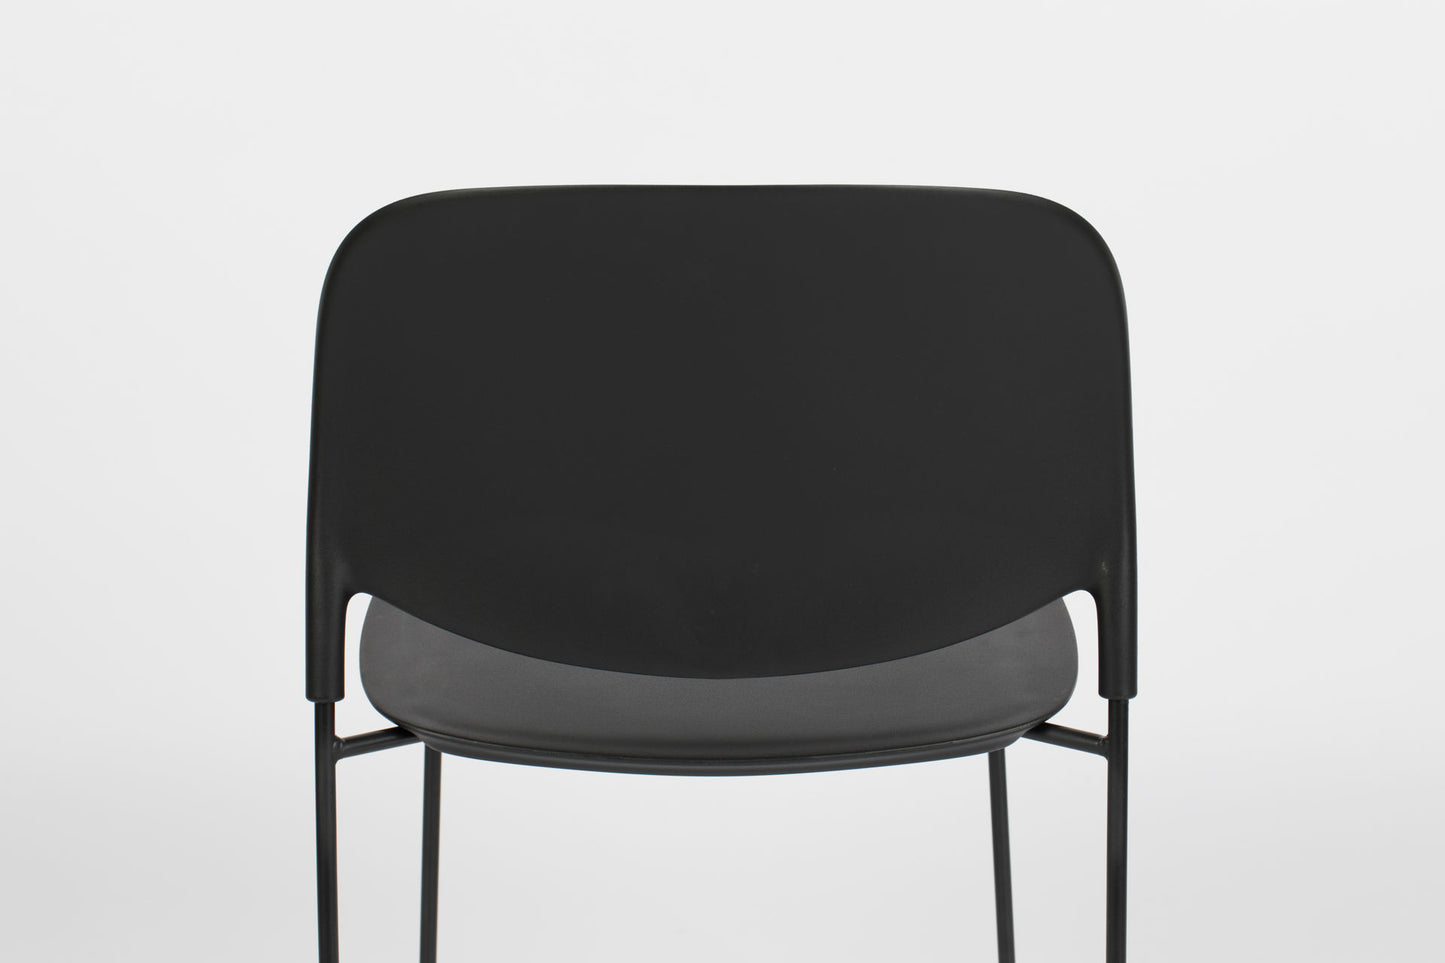 Nancy's Kennedale Chair - Retro - Black - Polypropylene, Steel, Plastic - 52.5 cm x 48.5 cm x 80 cm